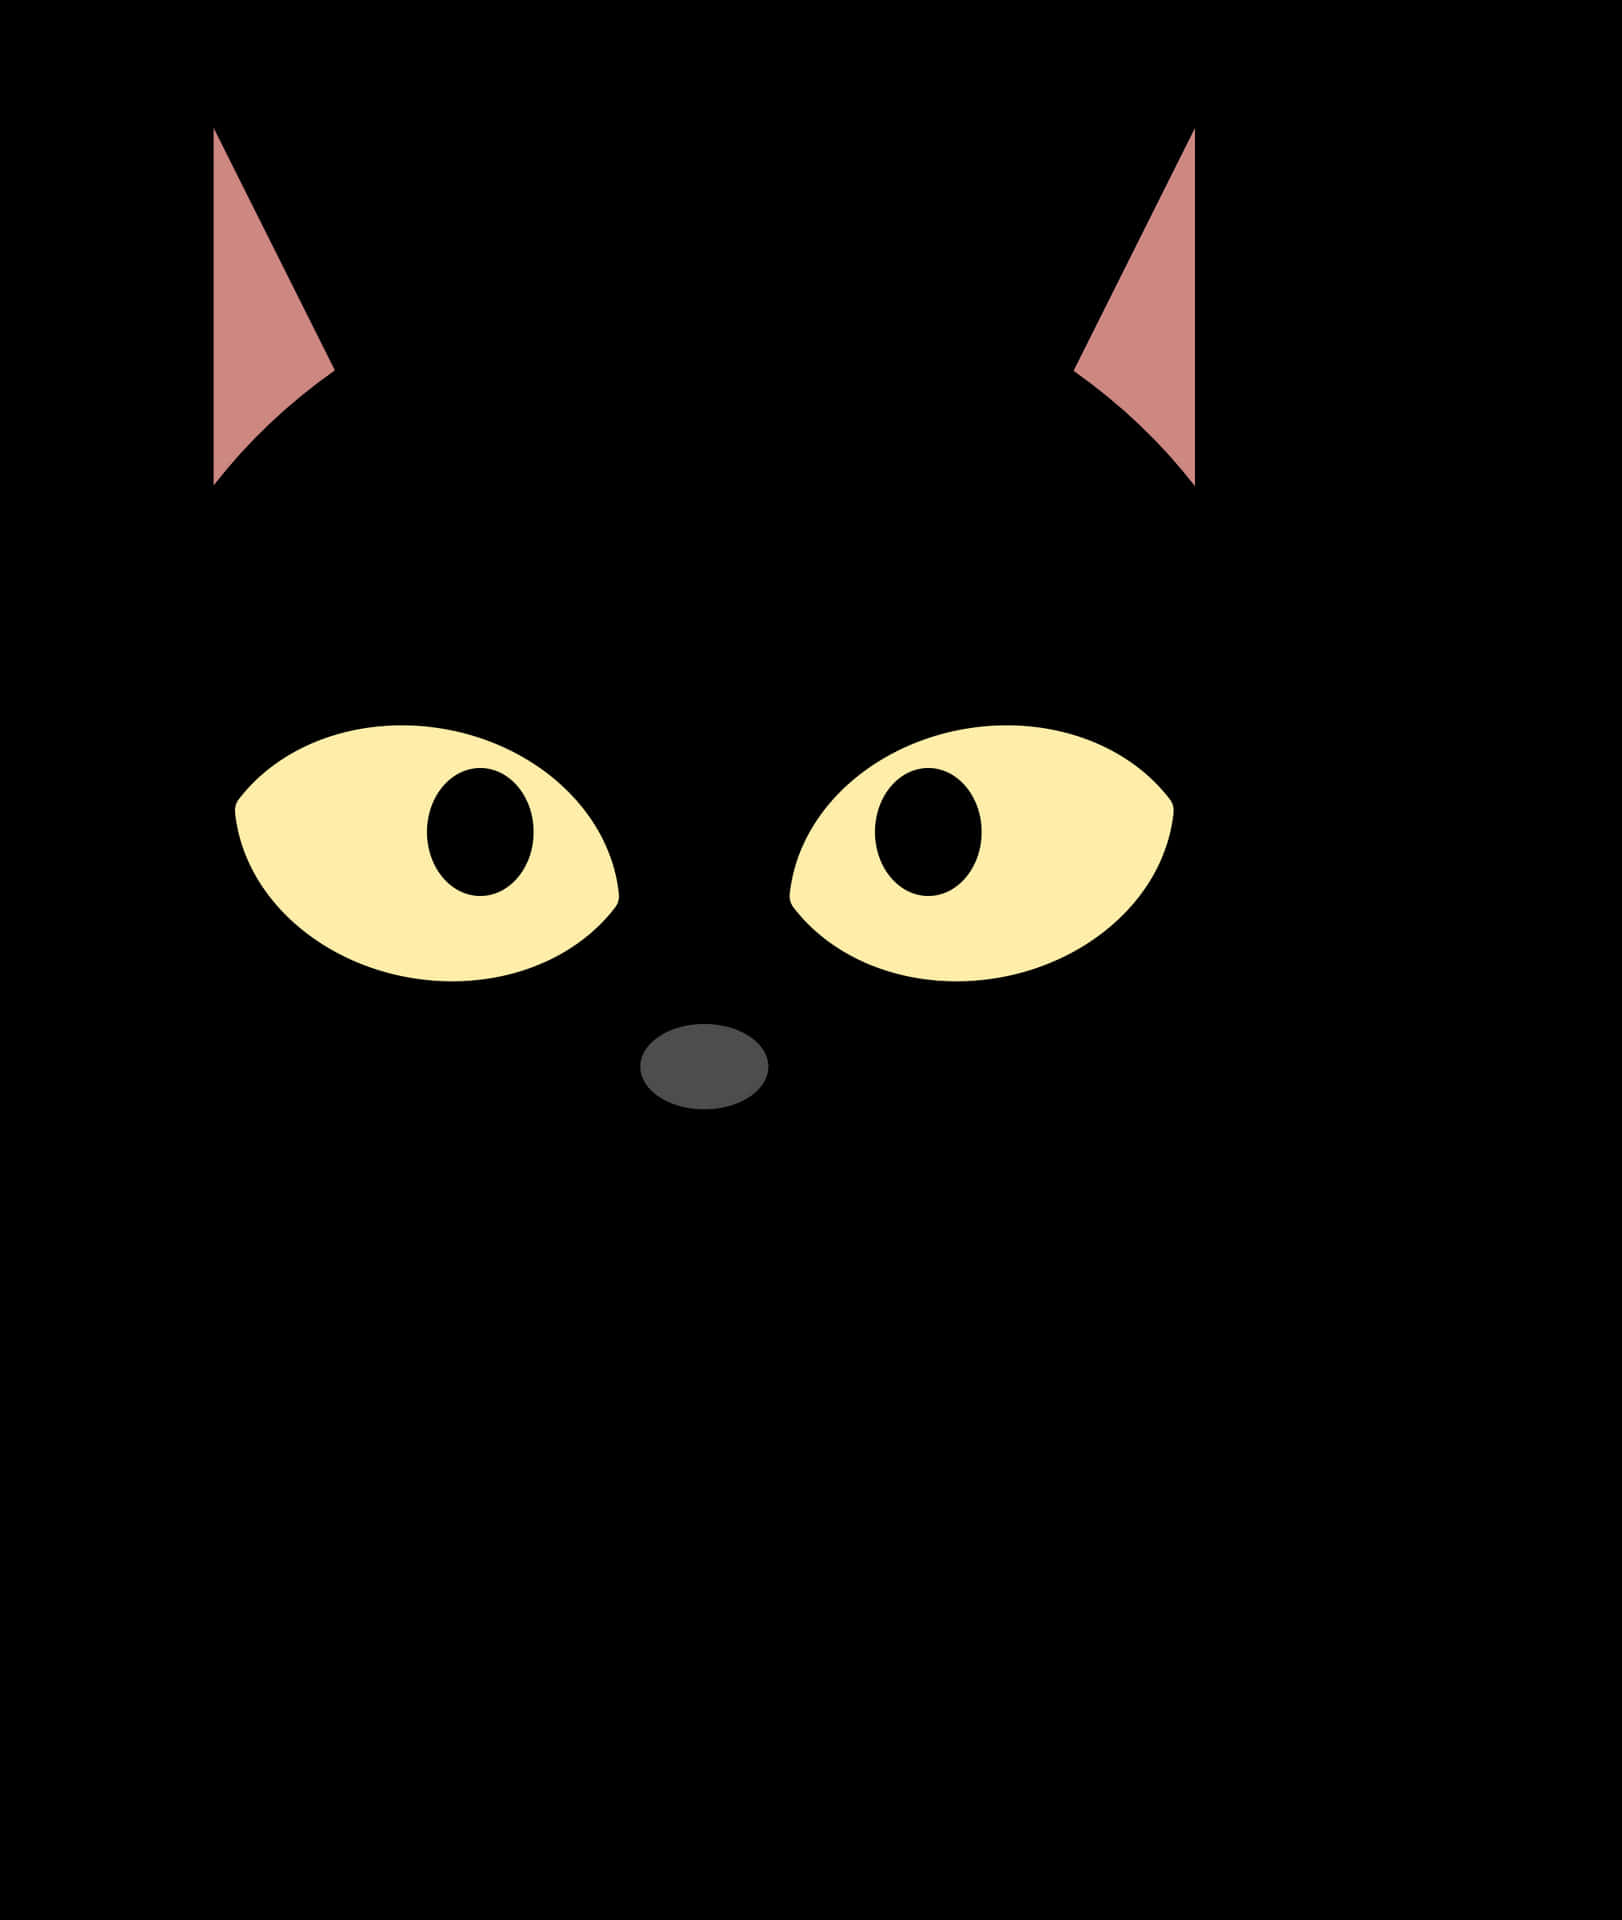 Minimalist Black Cat Face Illustration PNG image